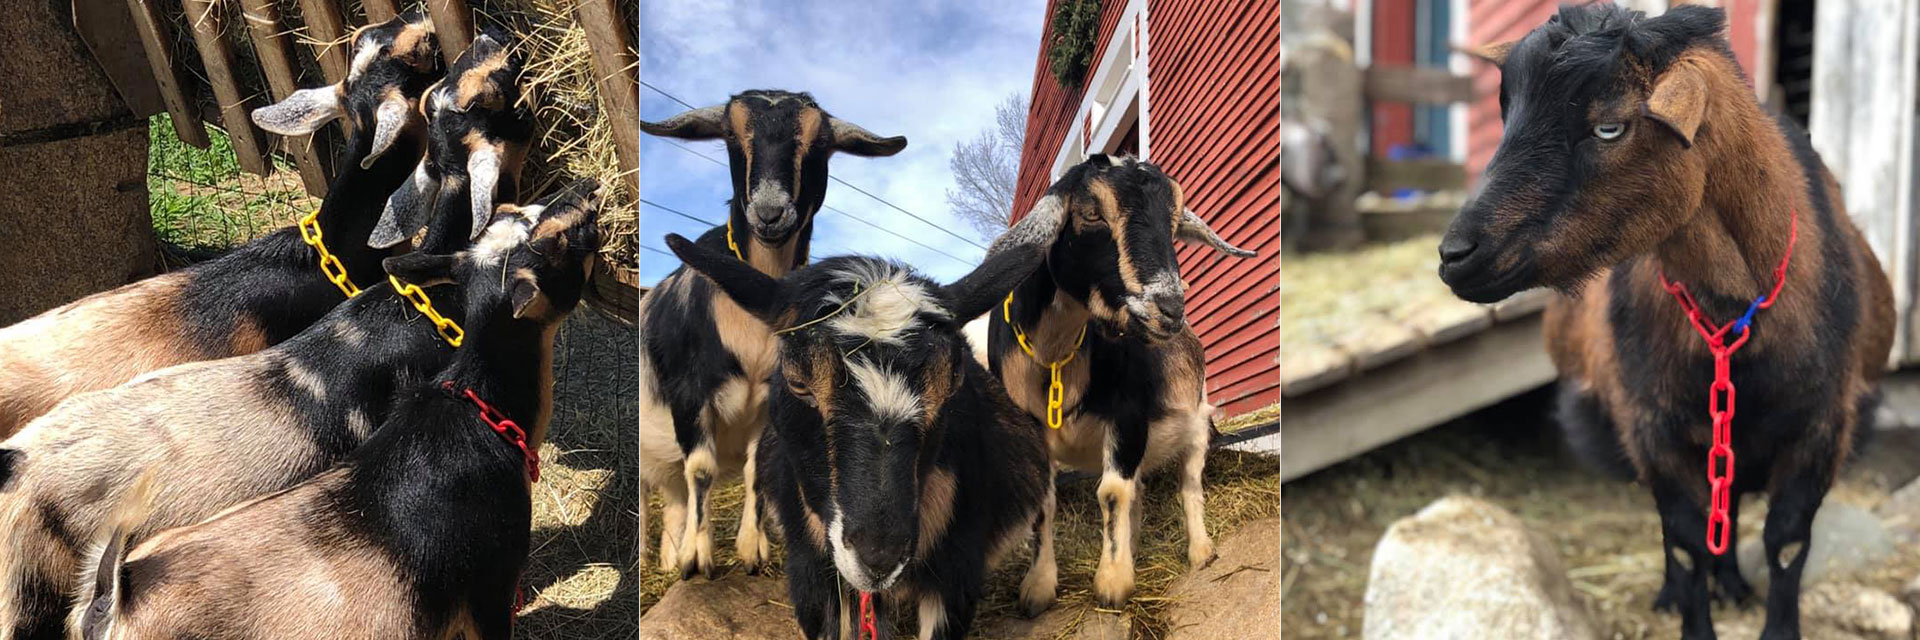 Goats at Three Charm Farm